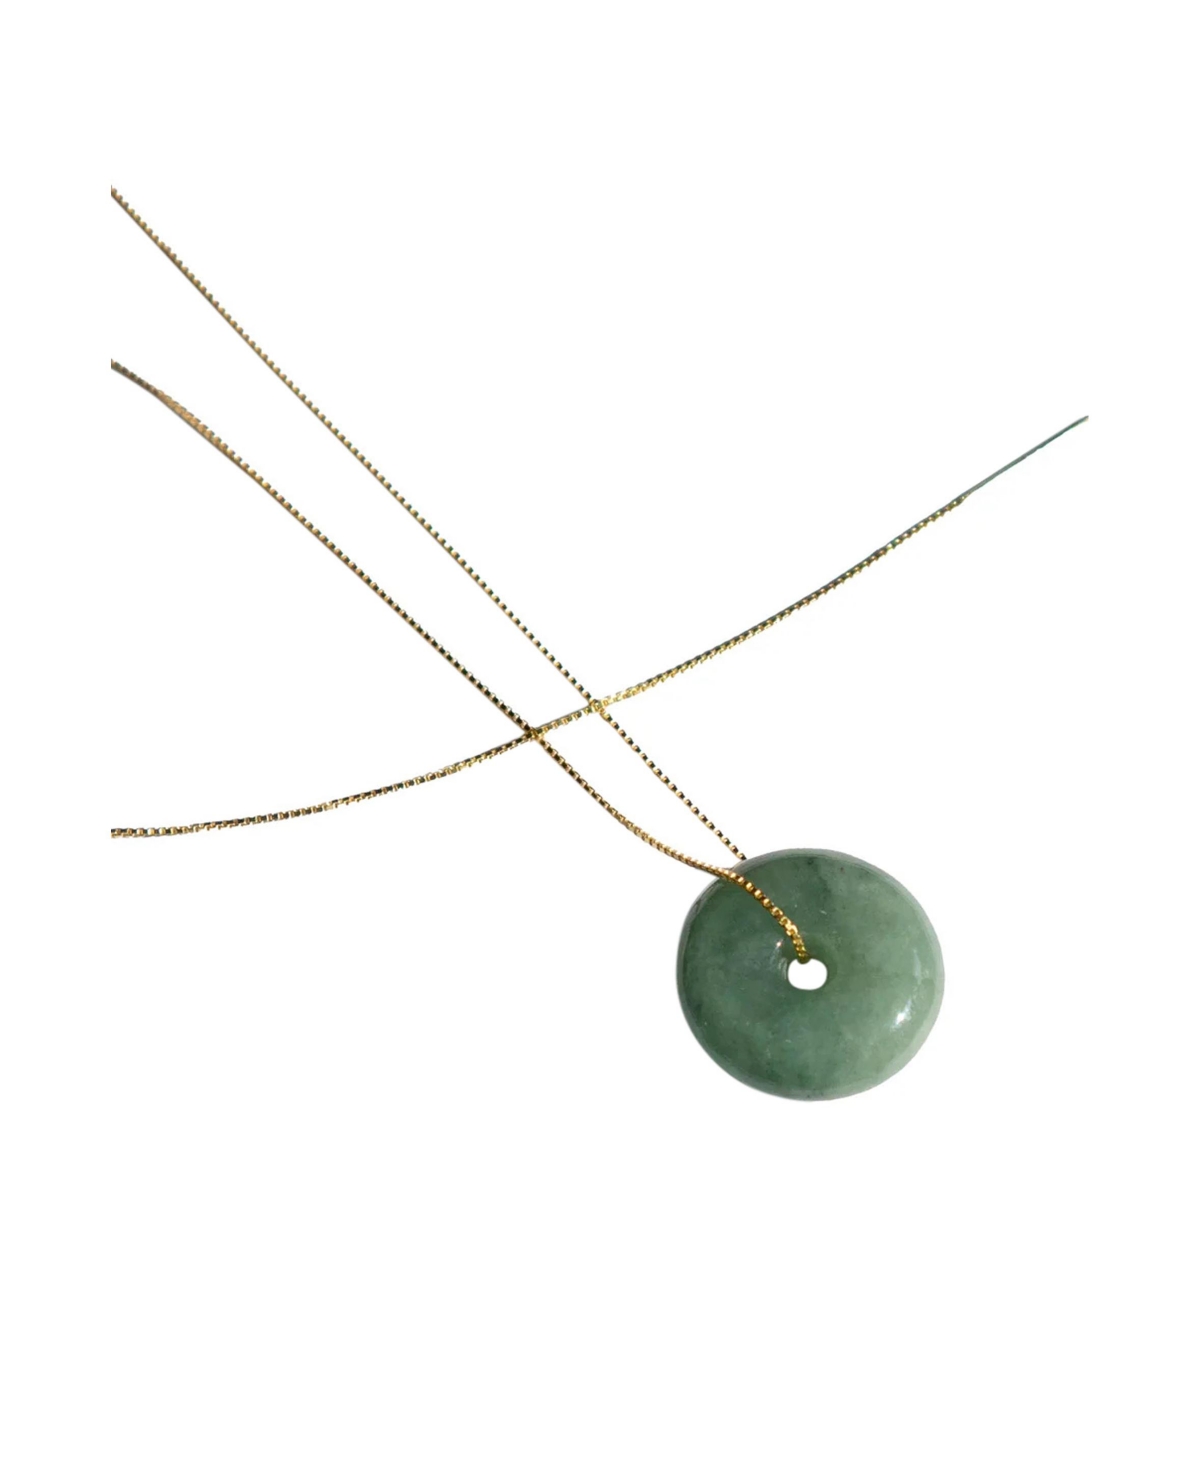 Button - Green jade pendant necklace - Green